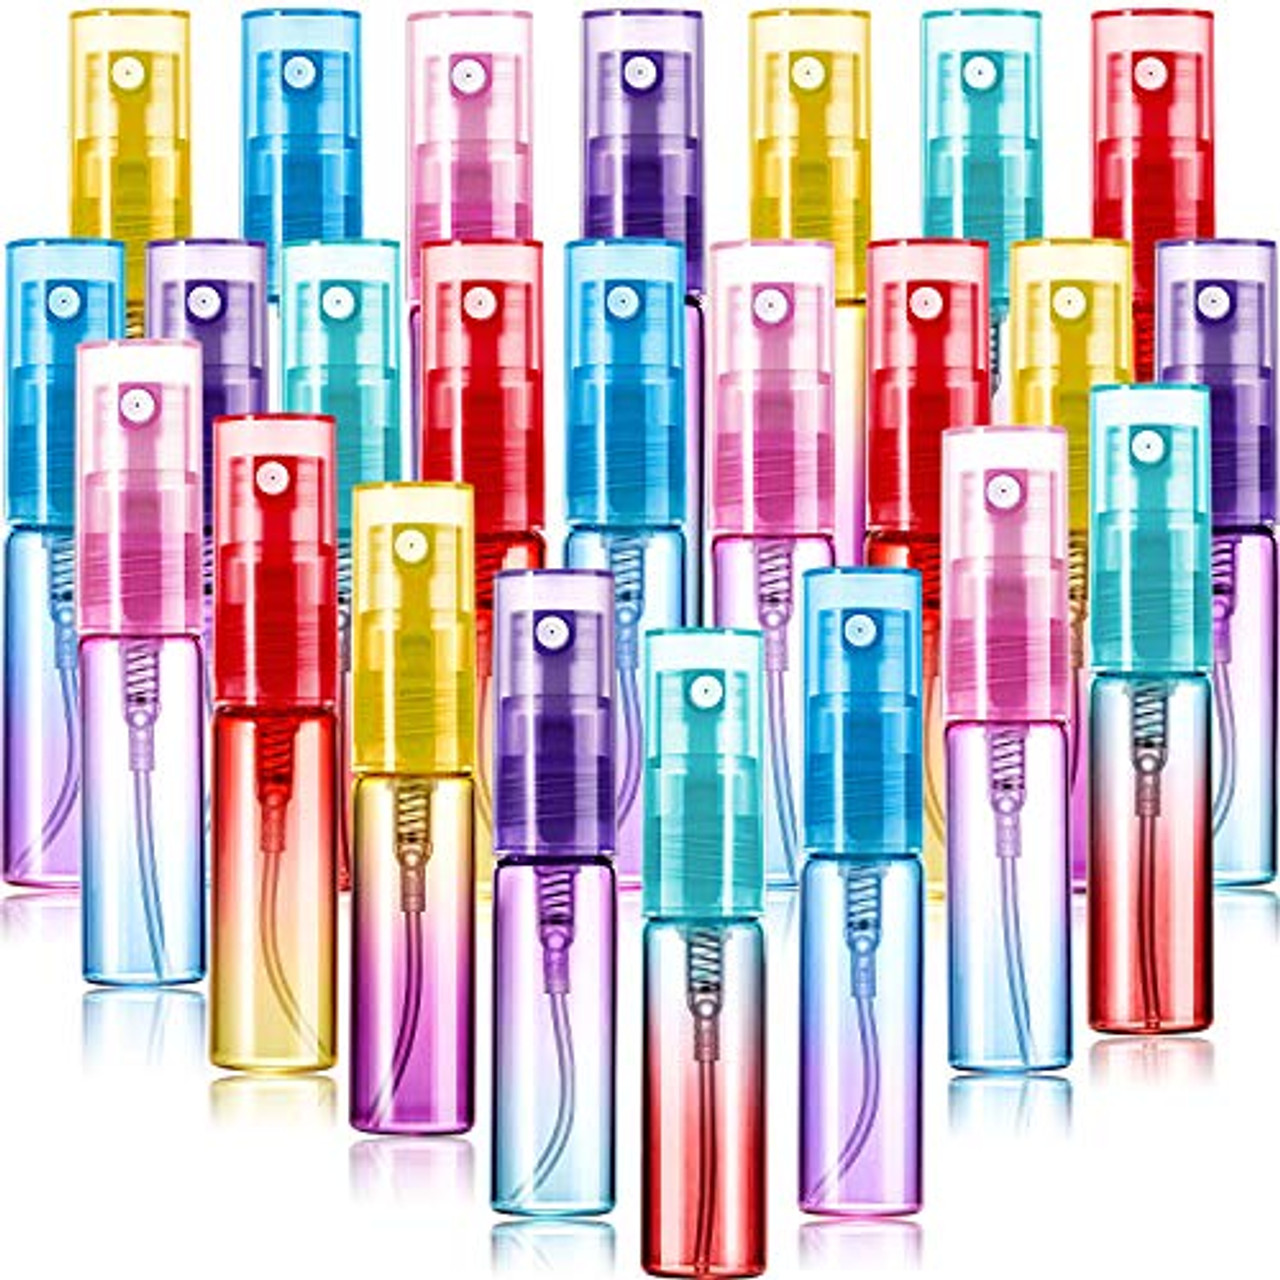 Mini Spray Bottle 5ml, Refillable Glass Spray Bottle, Glass Bottle  Atomizer, Perfume Mouthwash Atomizer for Cleaning 5ml Refillable Container  for Cleaning, Travel, Essential Oils, Perfume 60 Pcs, 5ml